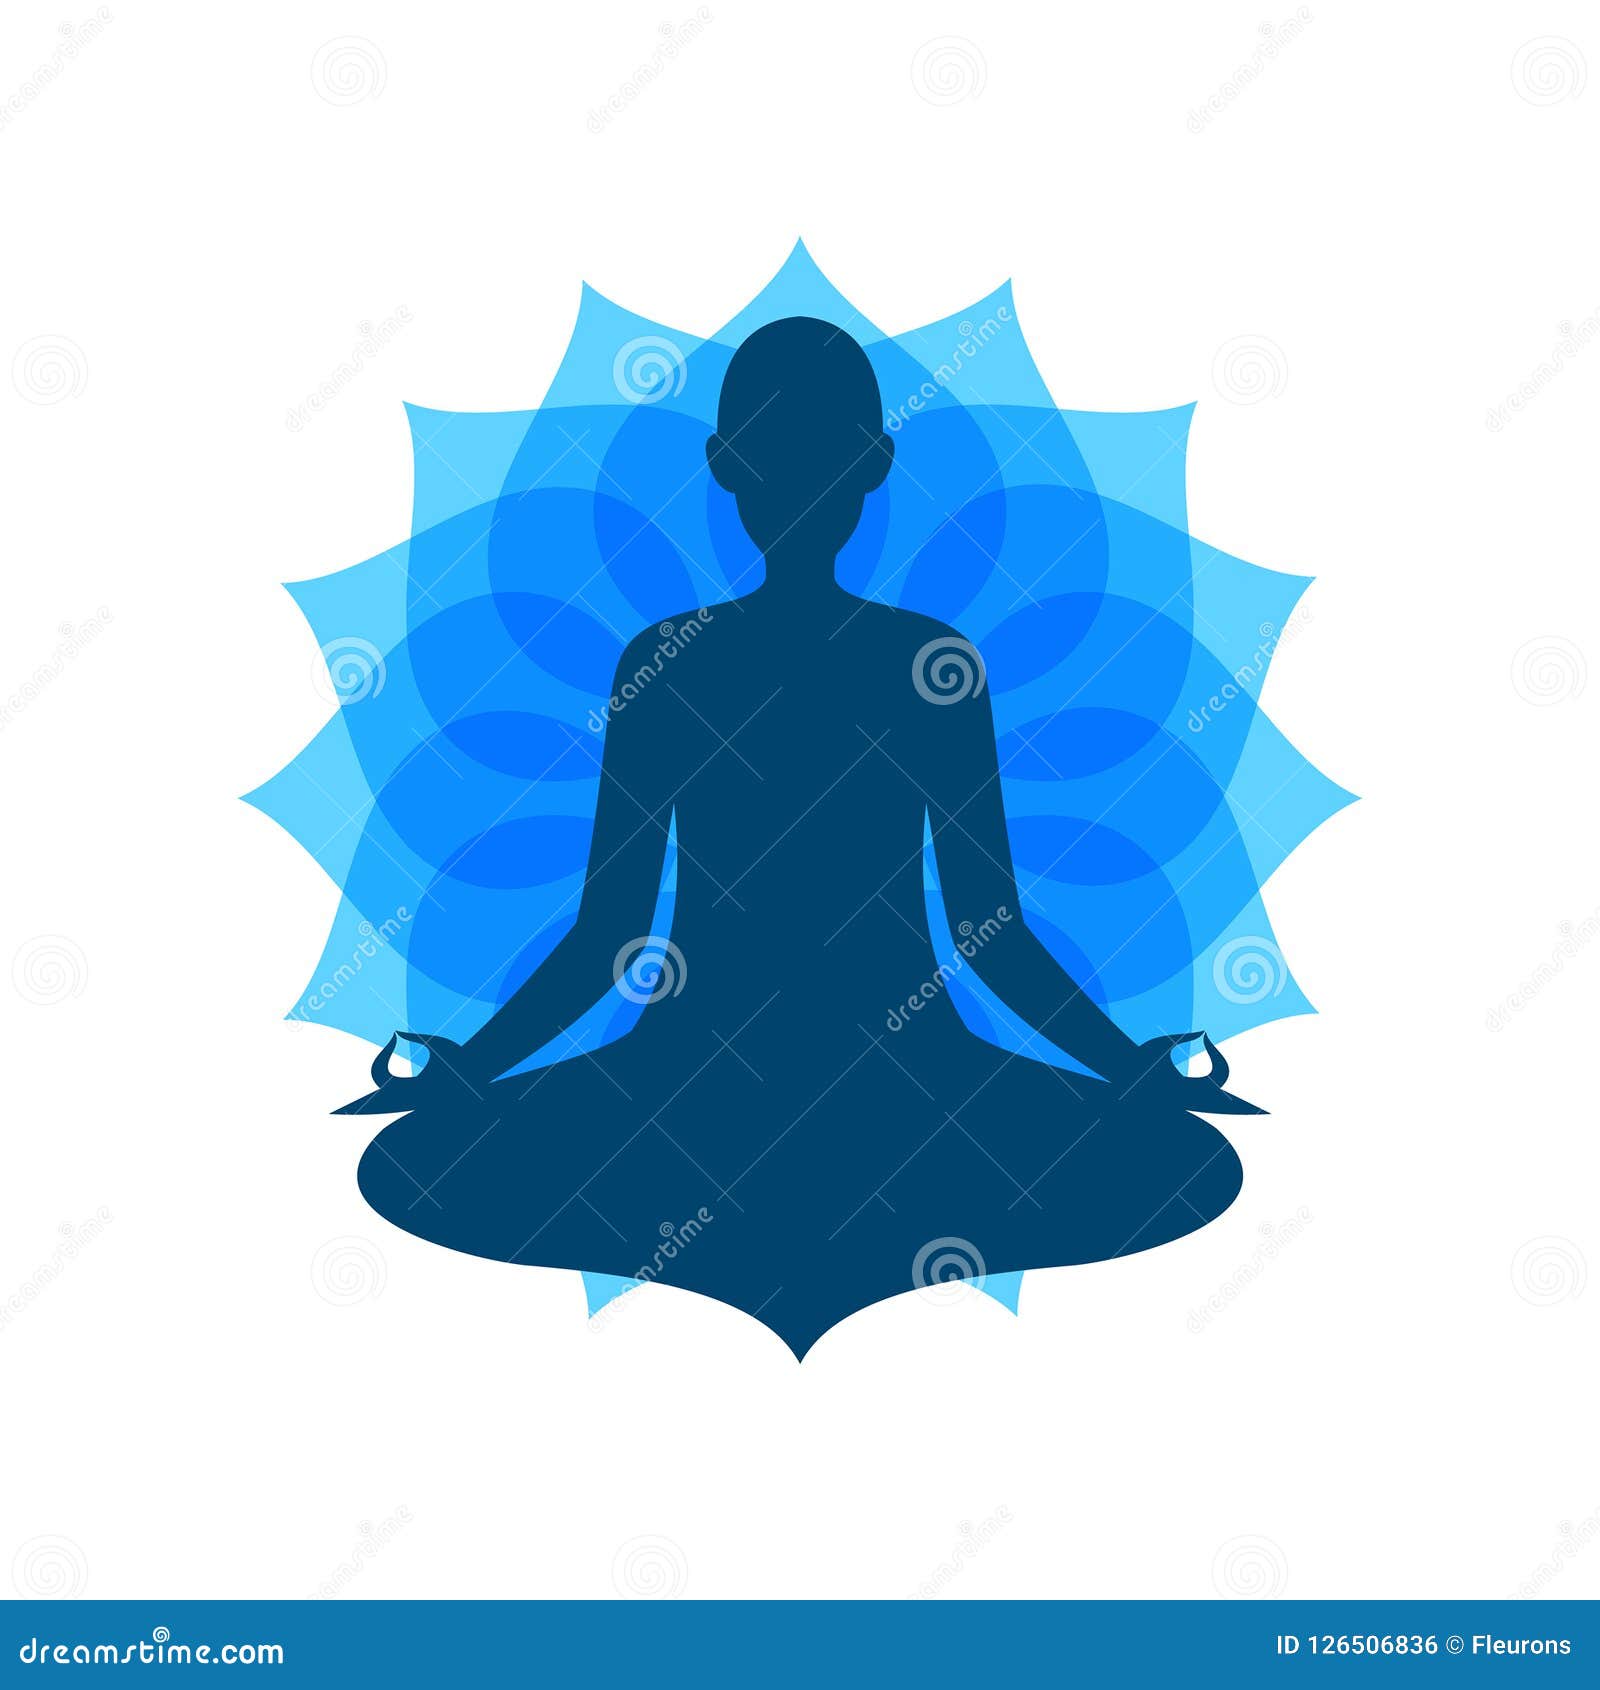 yoga meditation ascetic